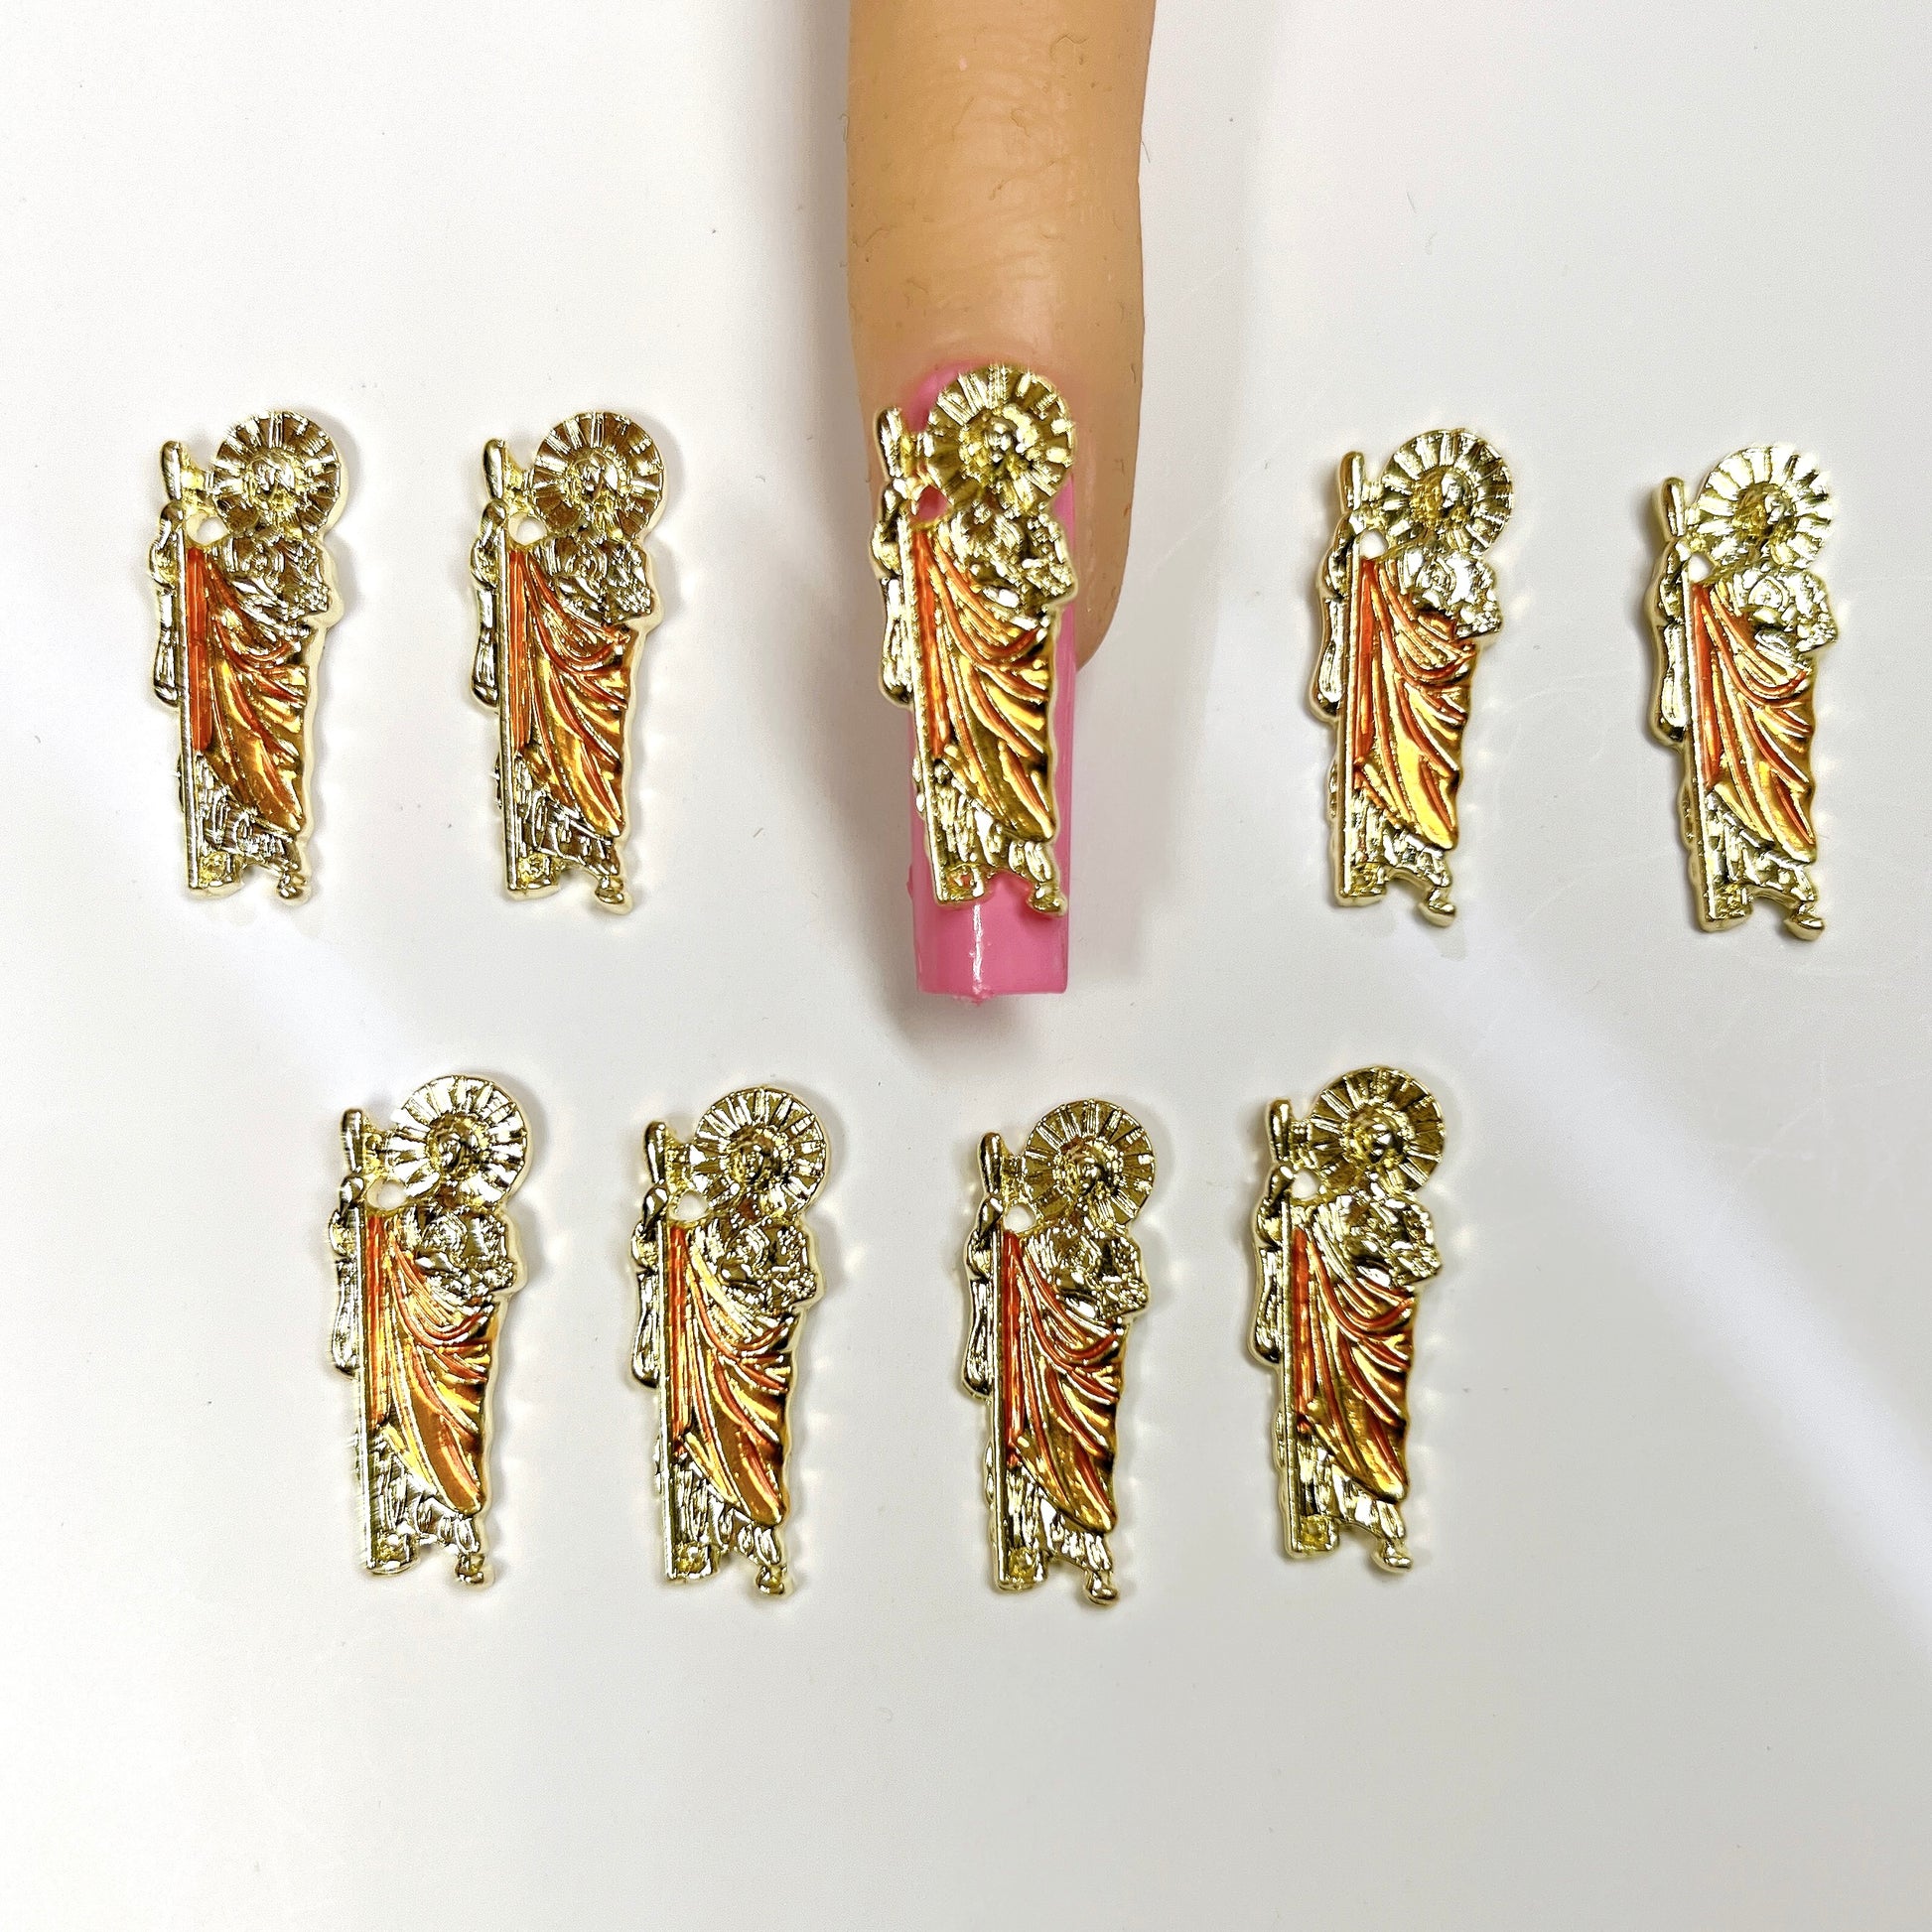 San Judas Charm for Nails - Copper Color